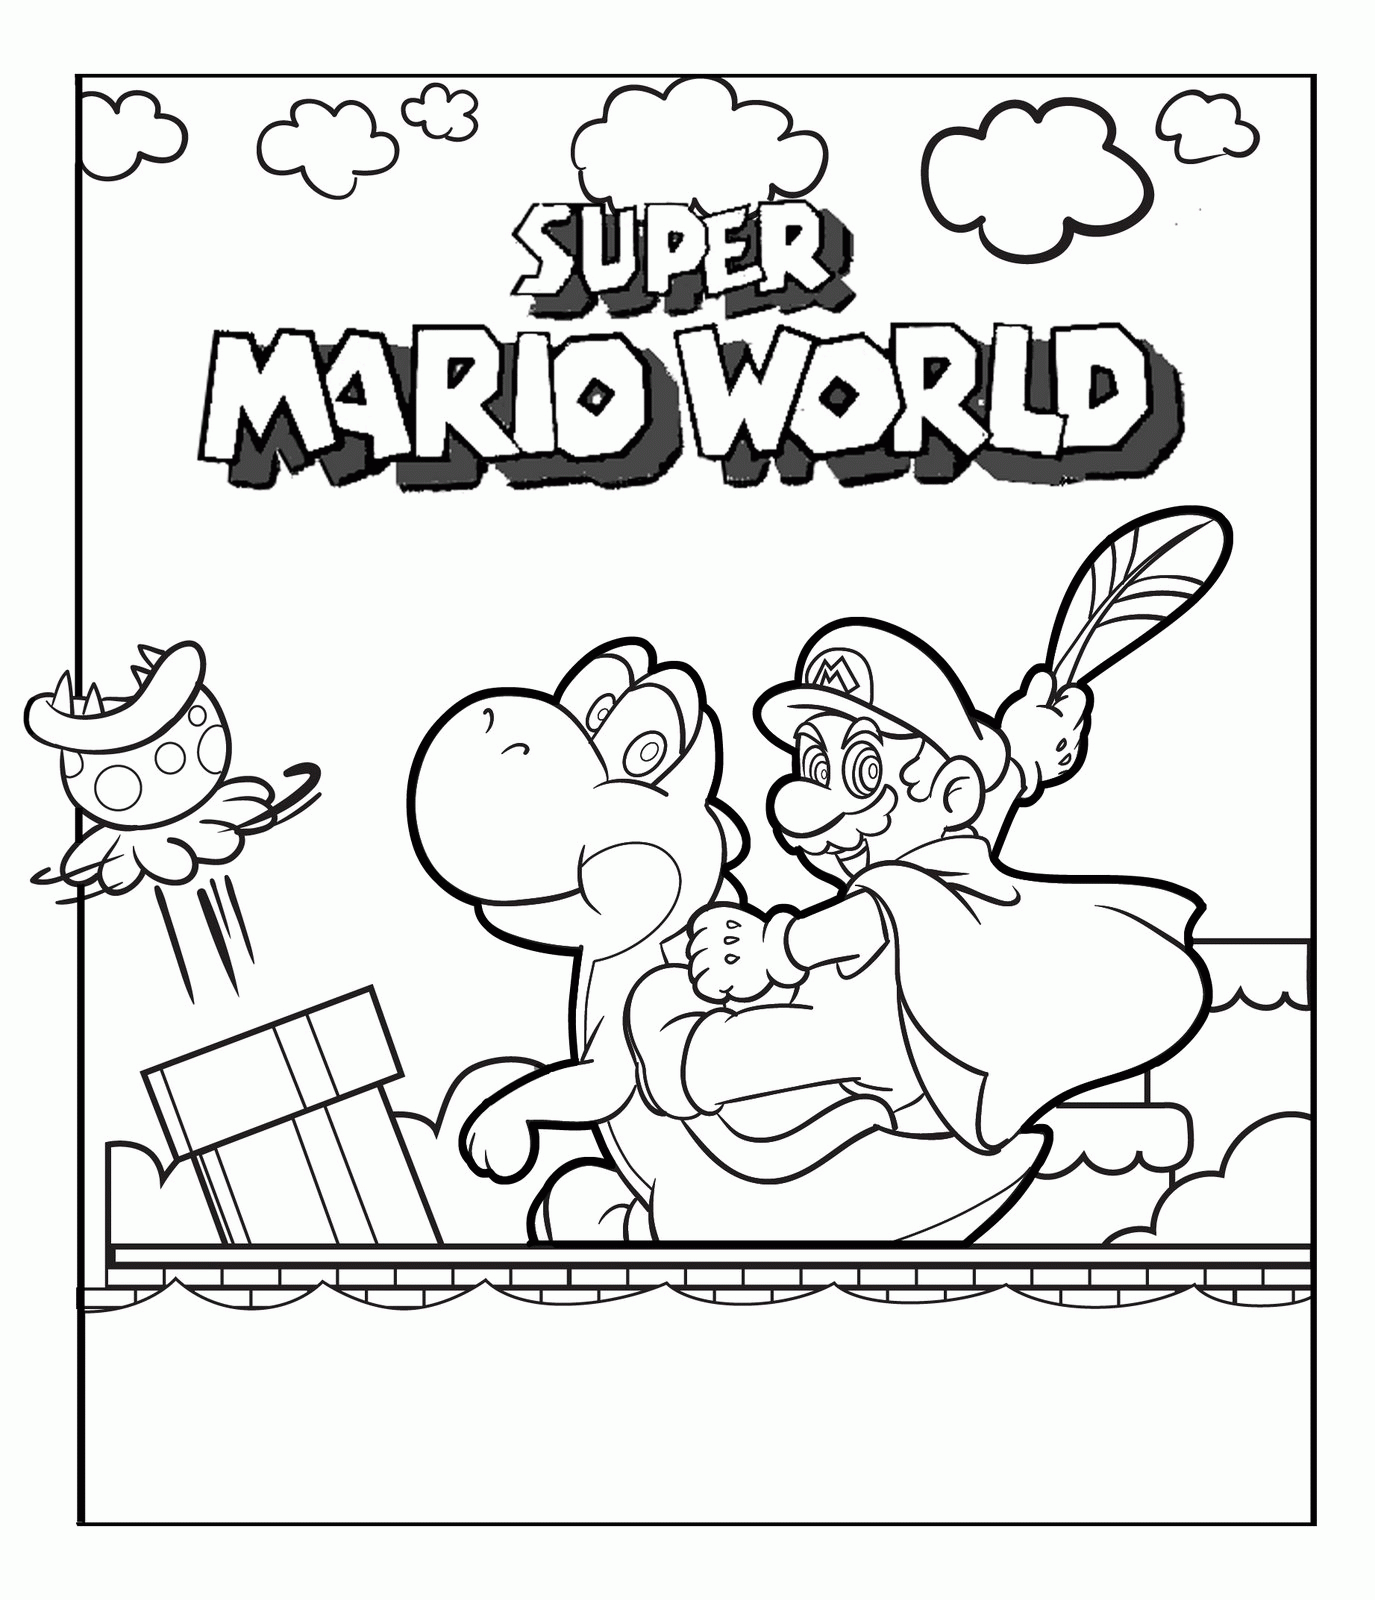 Image de Super Mario World à imprimer